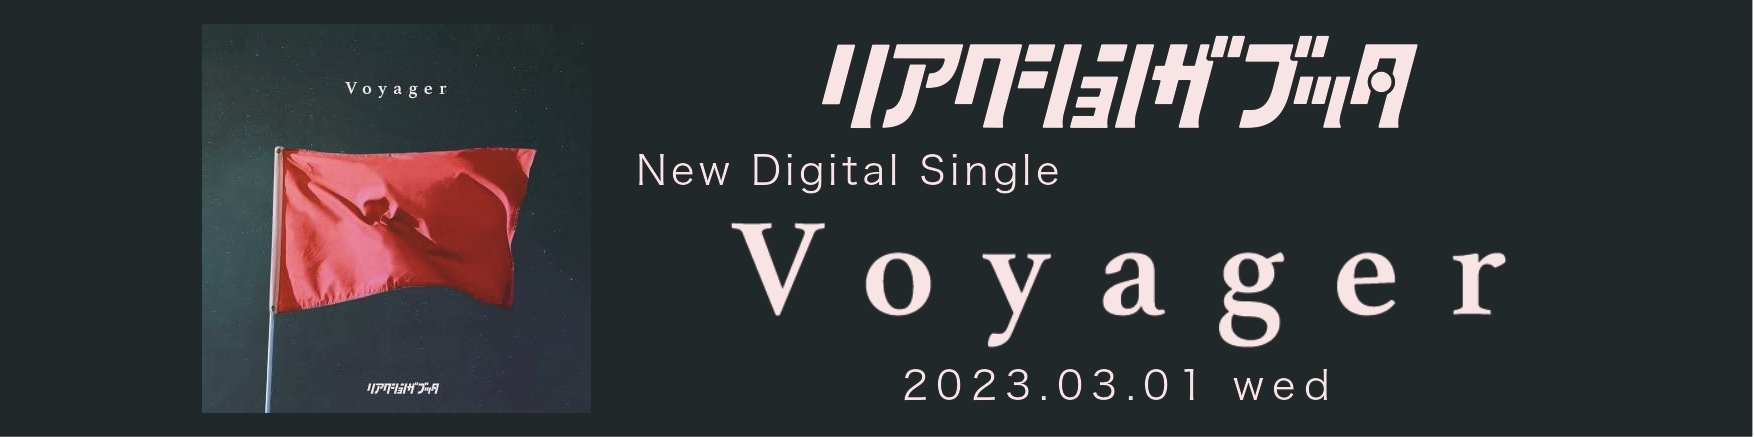 Digital Single「Voyager」